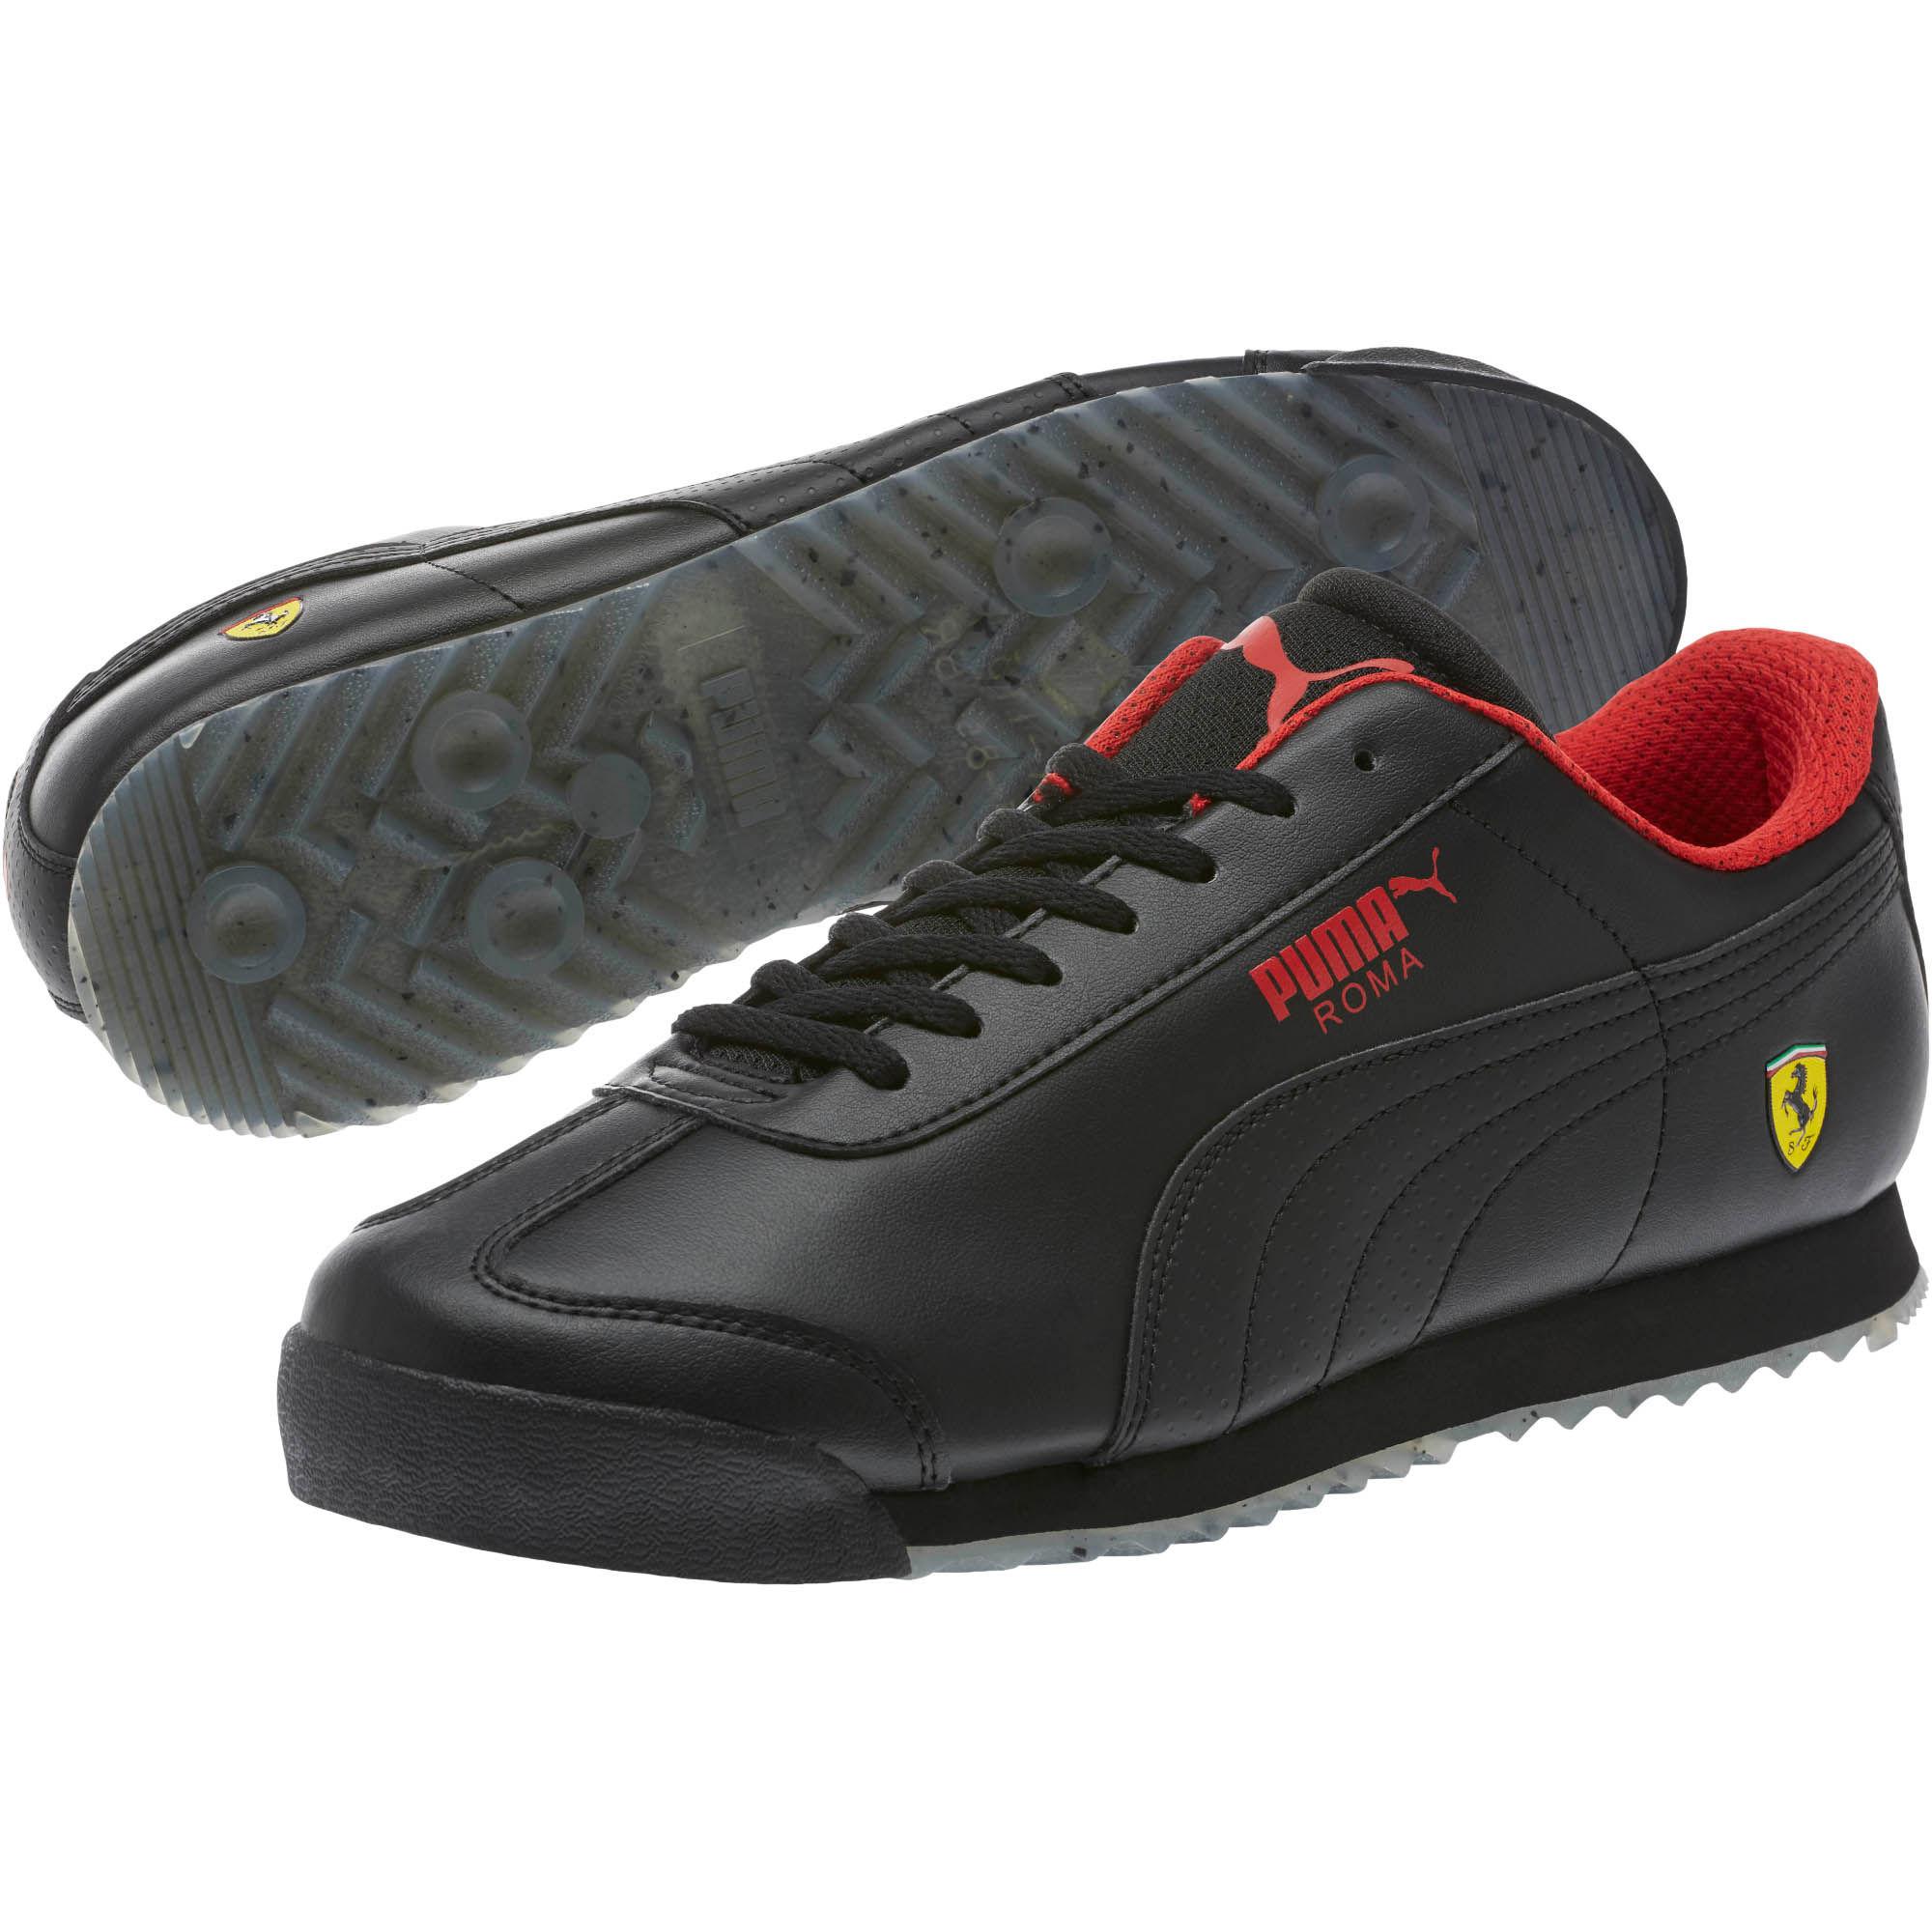 Lyst - Puma Ferrari Roma Men's Sneakers in Black for Men